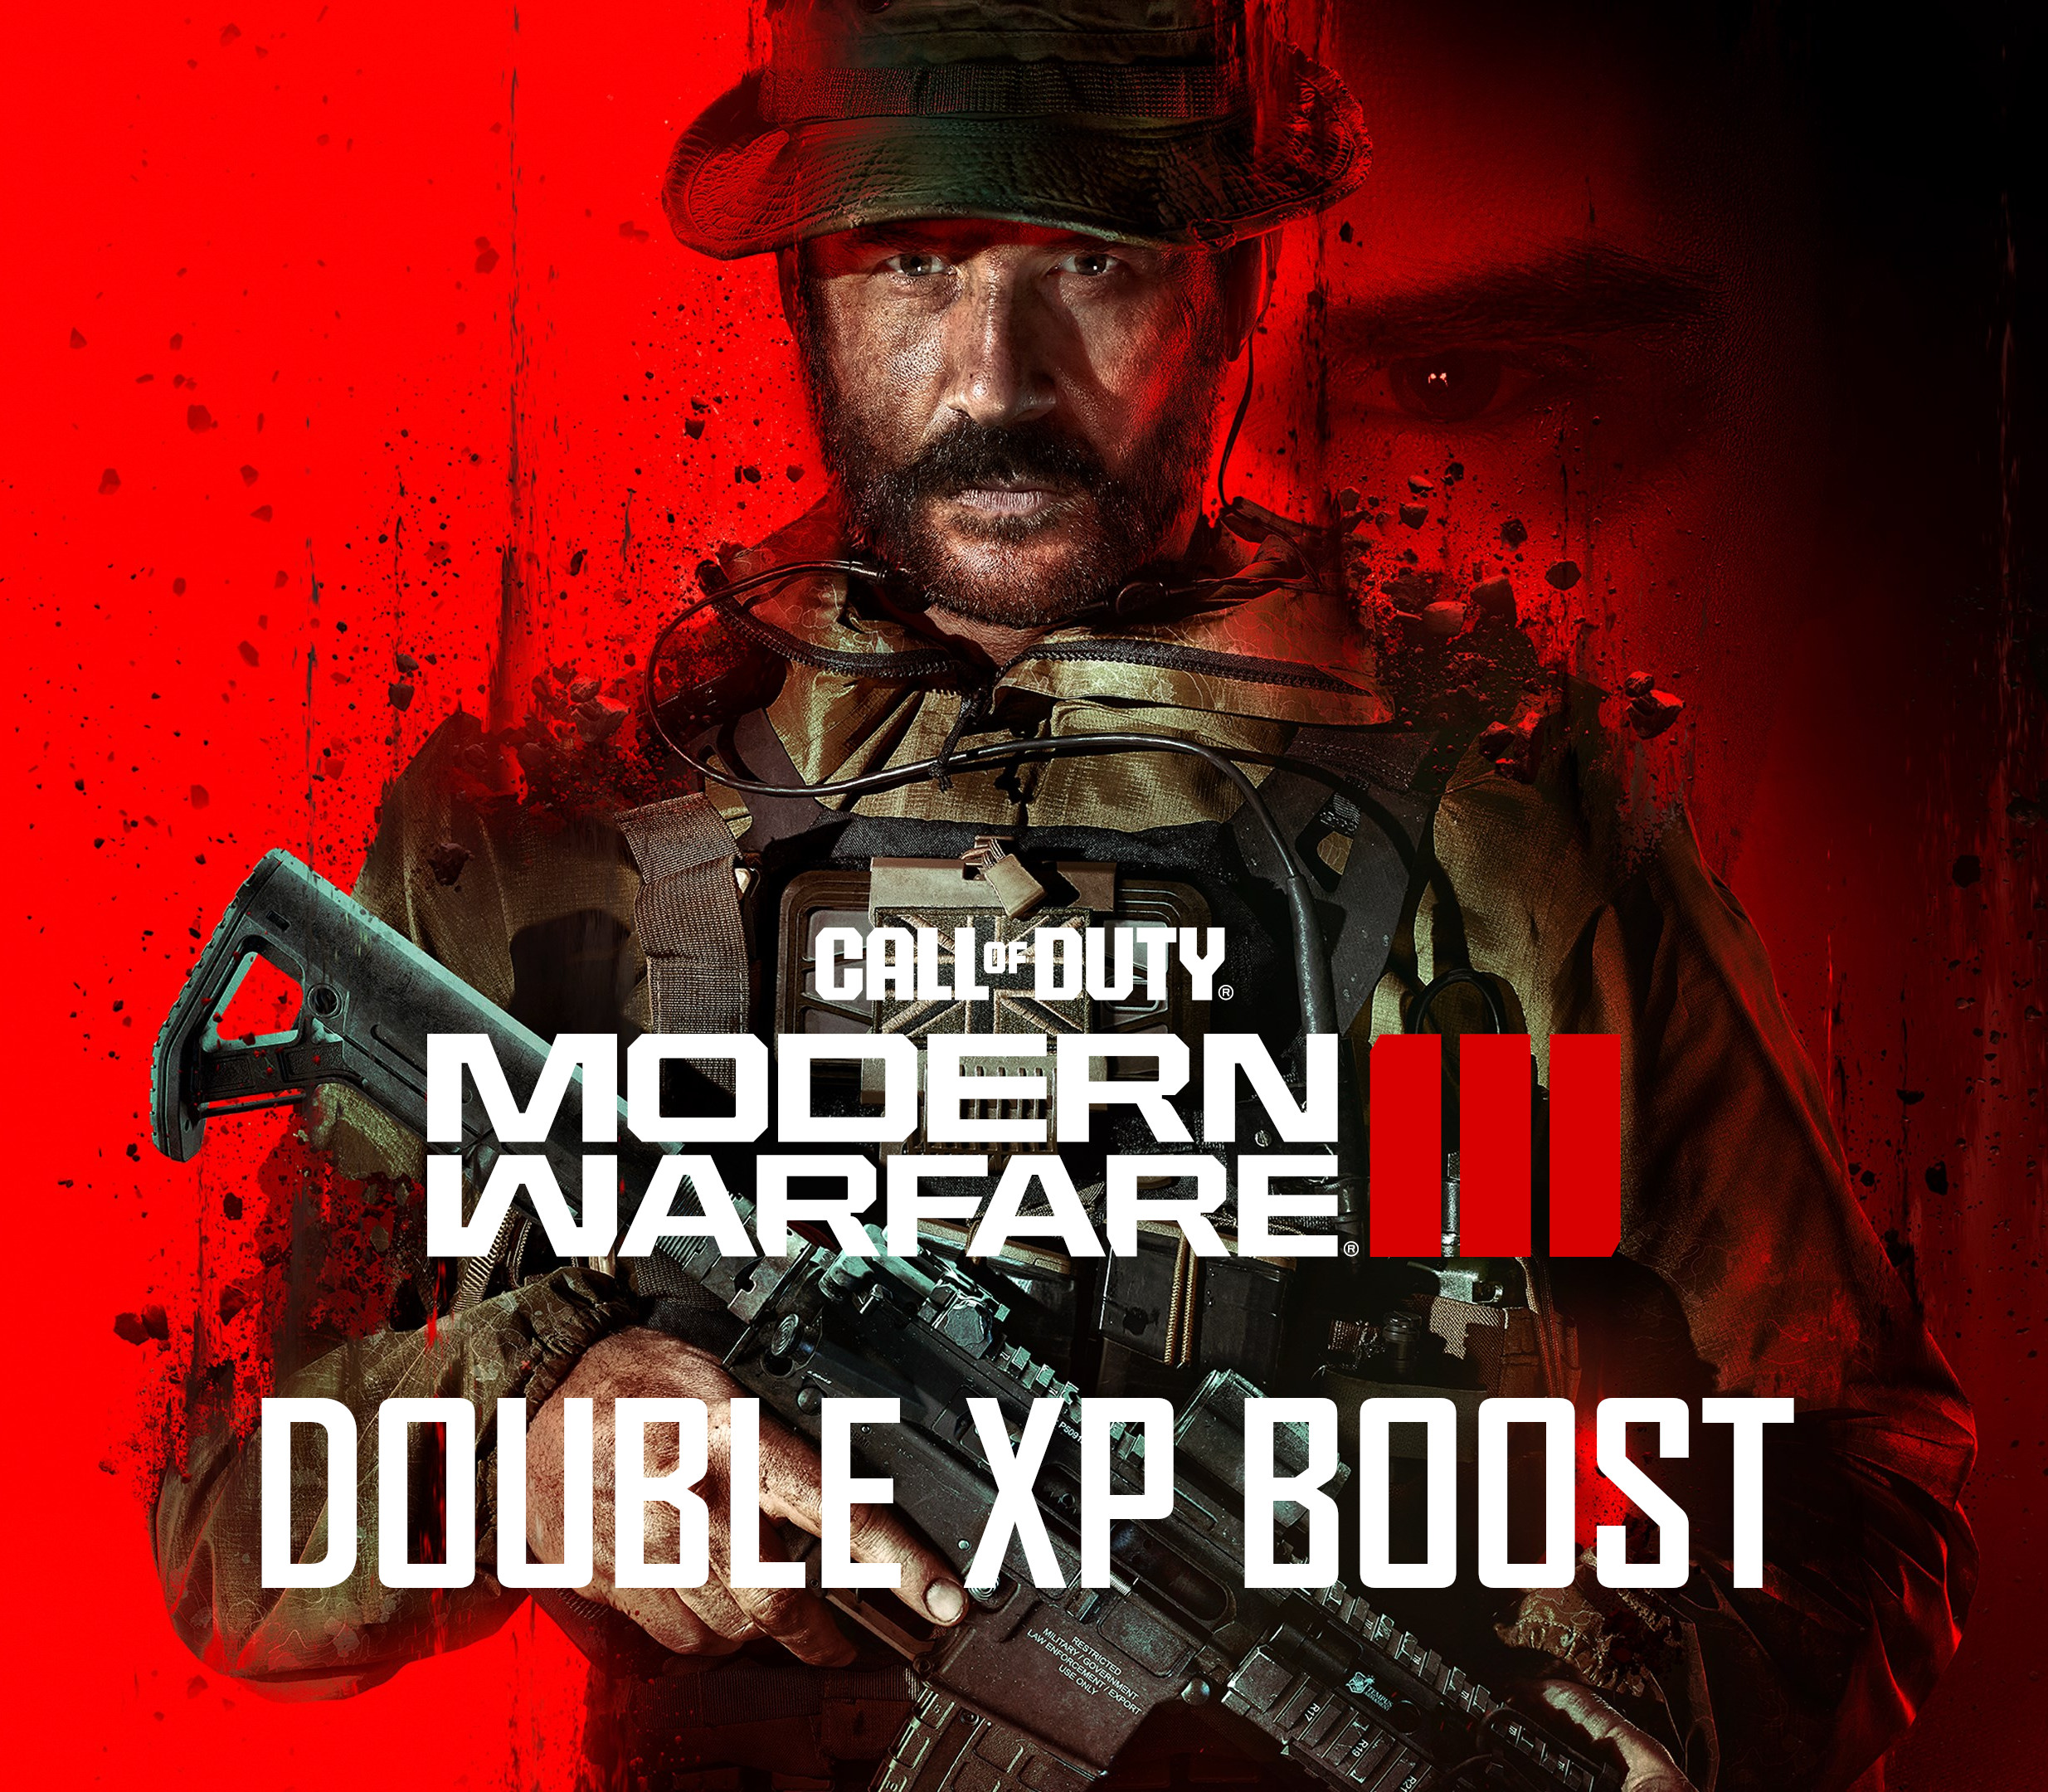 Cheapest Call of Duty: Modern Warfare III BETA Access NA / Kinguin